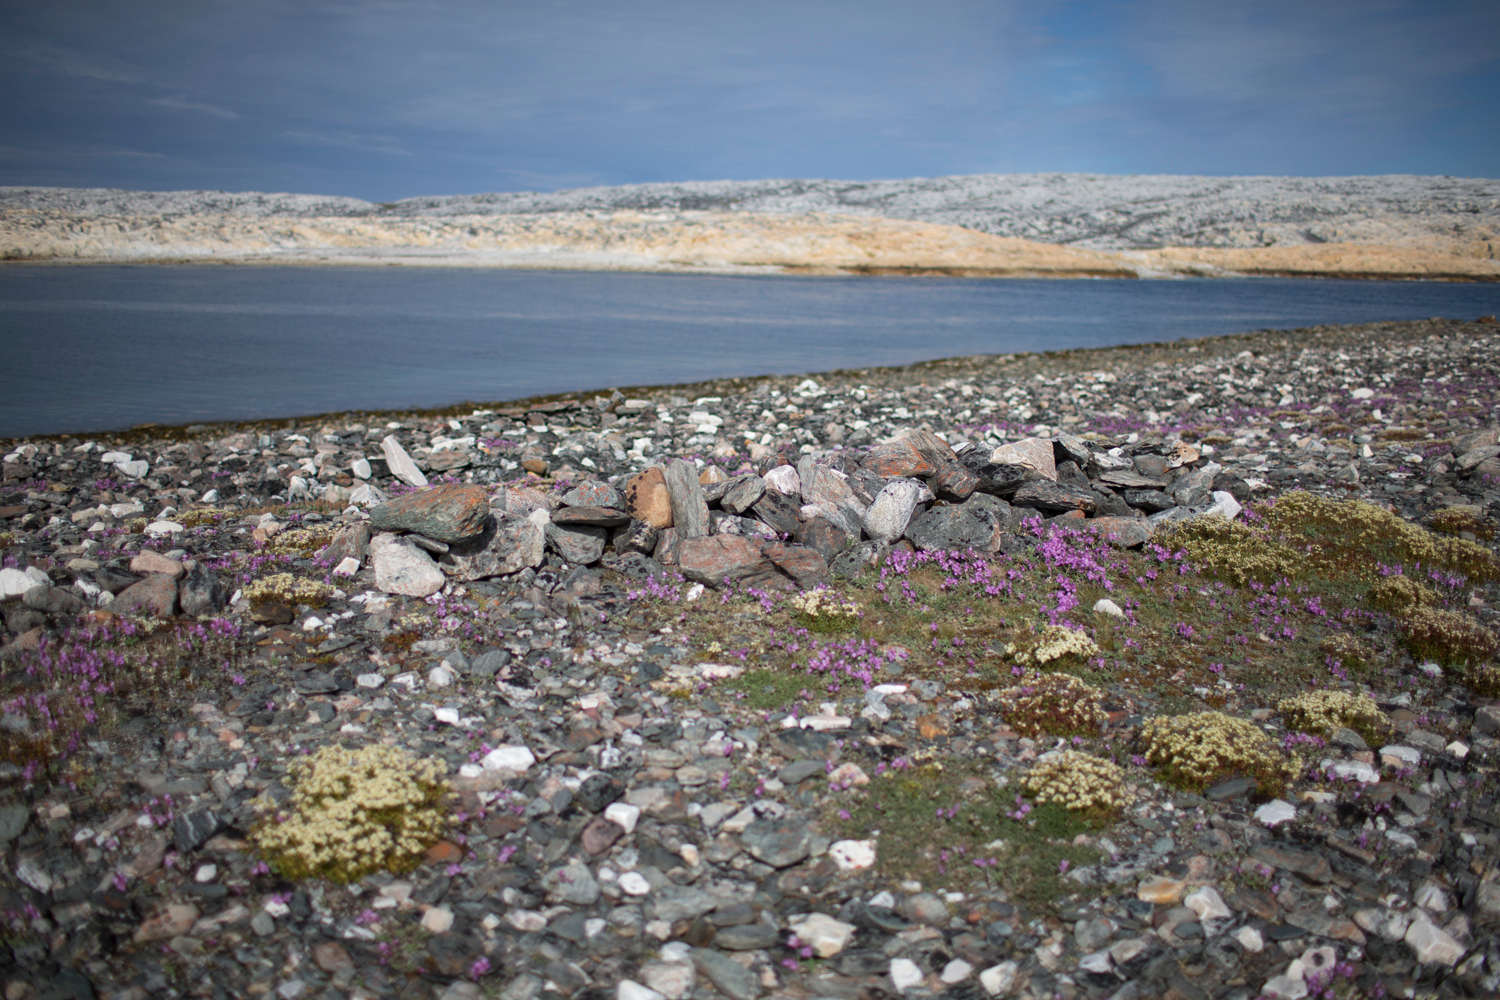     Johan Hallberg-Campbell, Marble Island, Dead Man’s Island, Nunavut, 2014. Courtesy of the artist.

